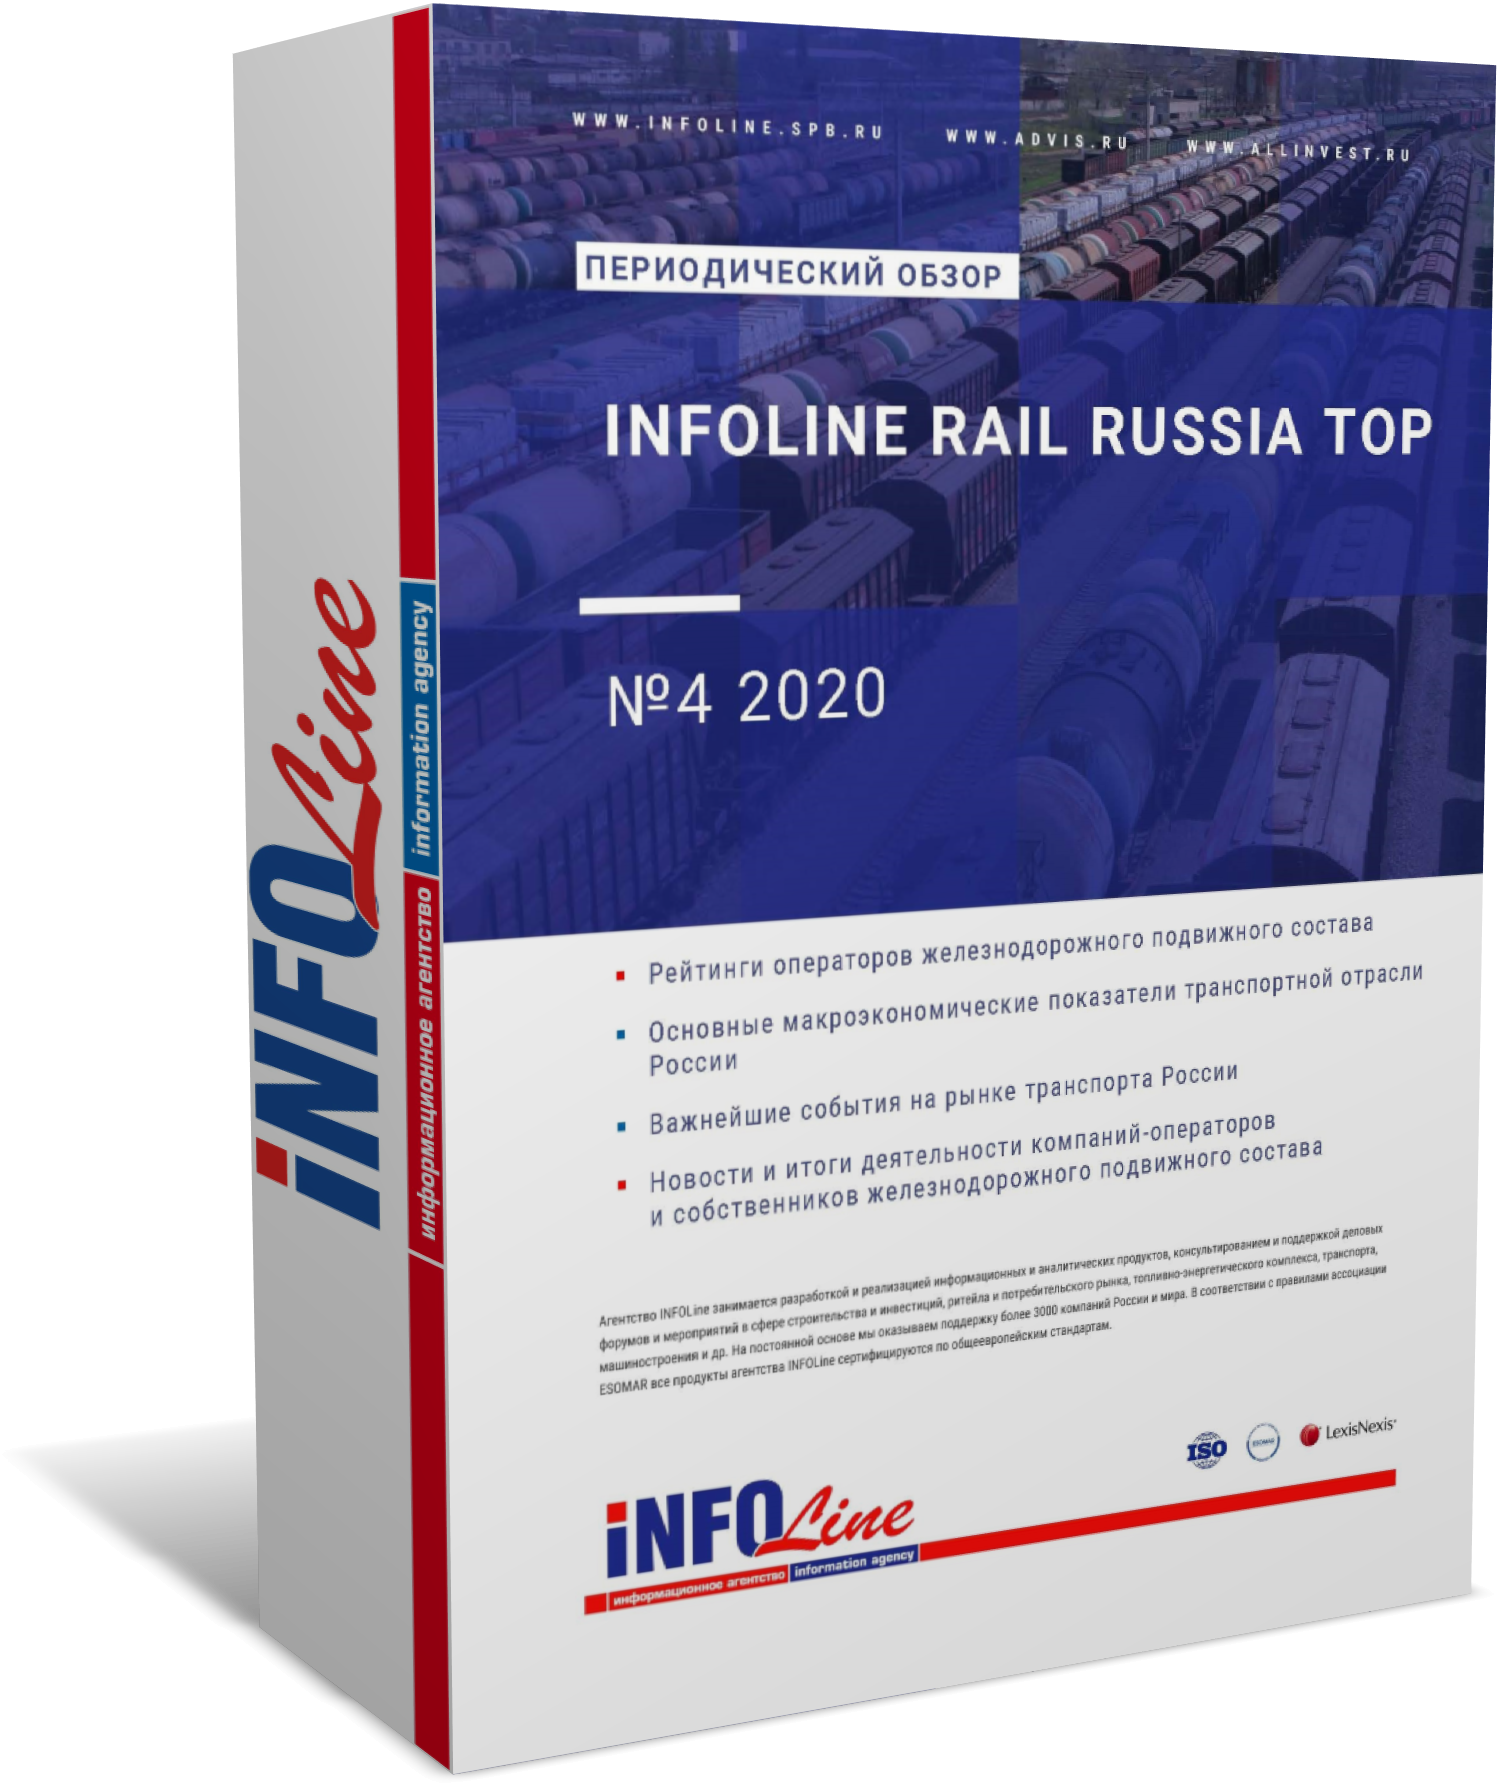   "INFOLine Rail Russia TOP: 4 2020 "